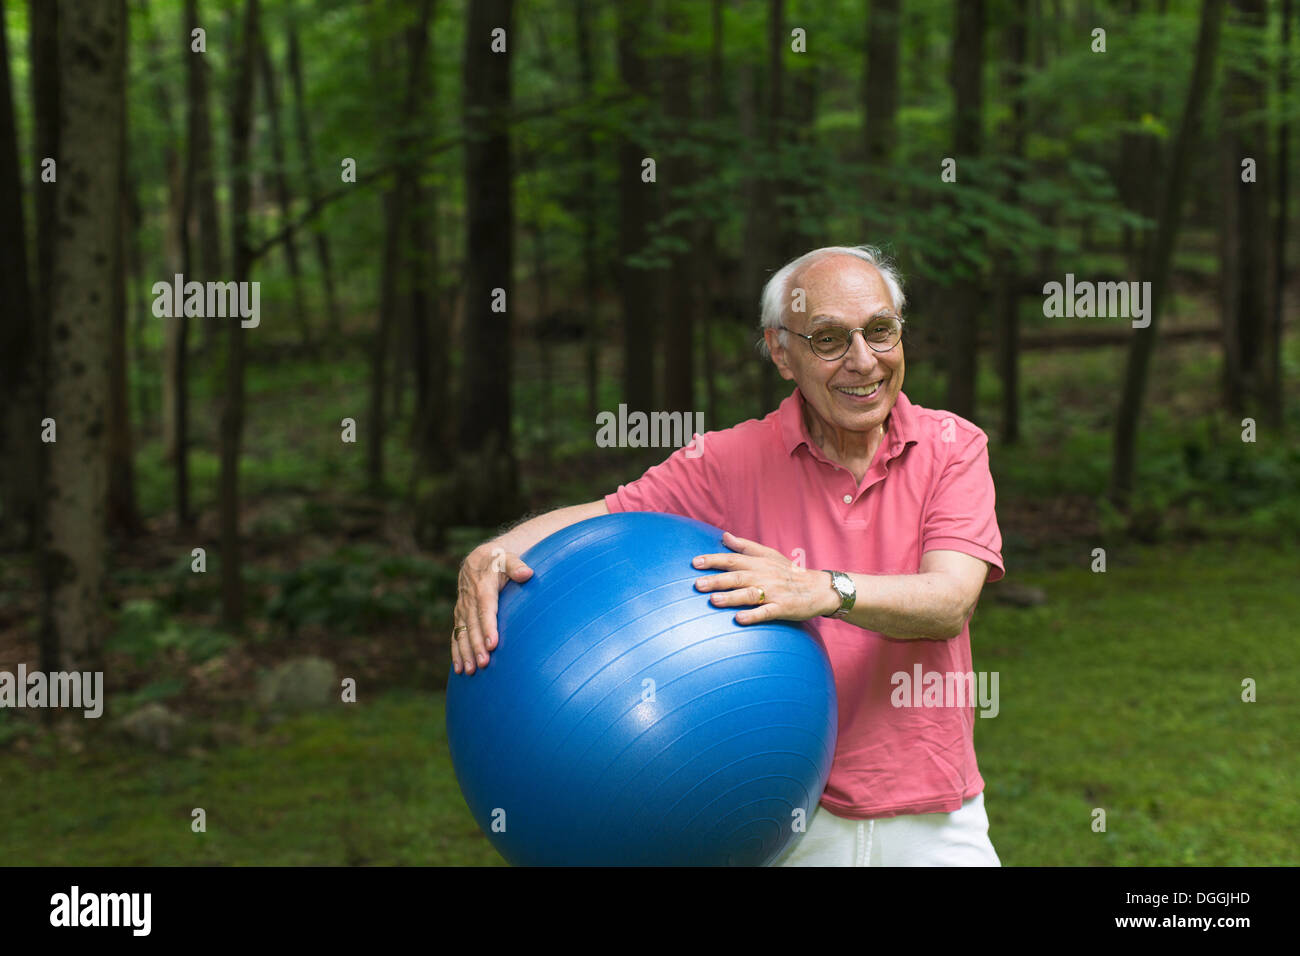 Senior man holding exercise ball, portrait Banque D'Images